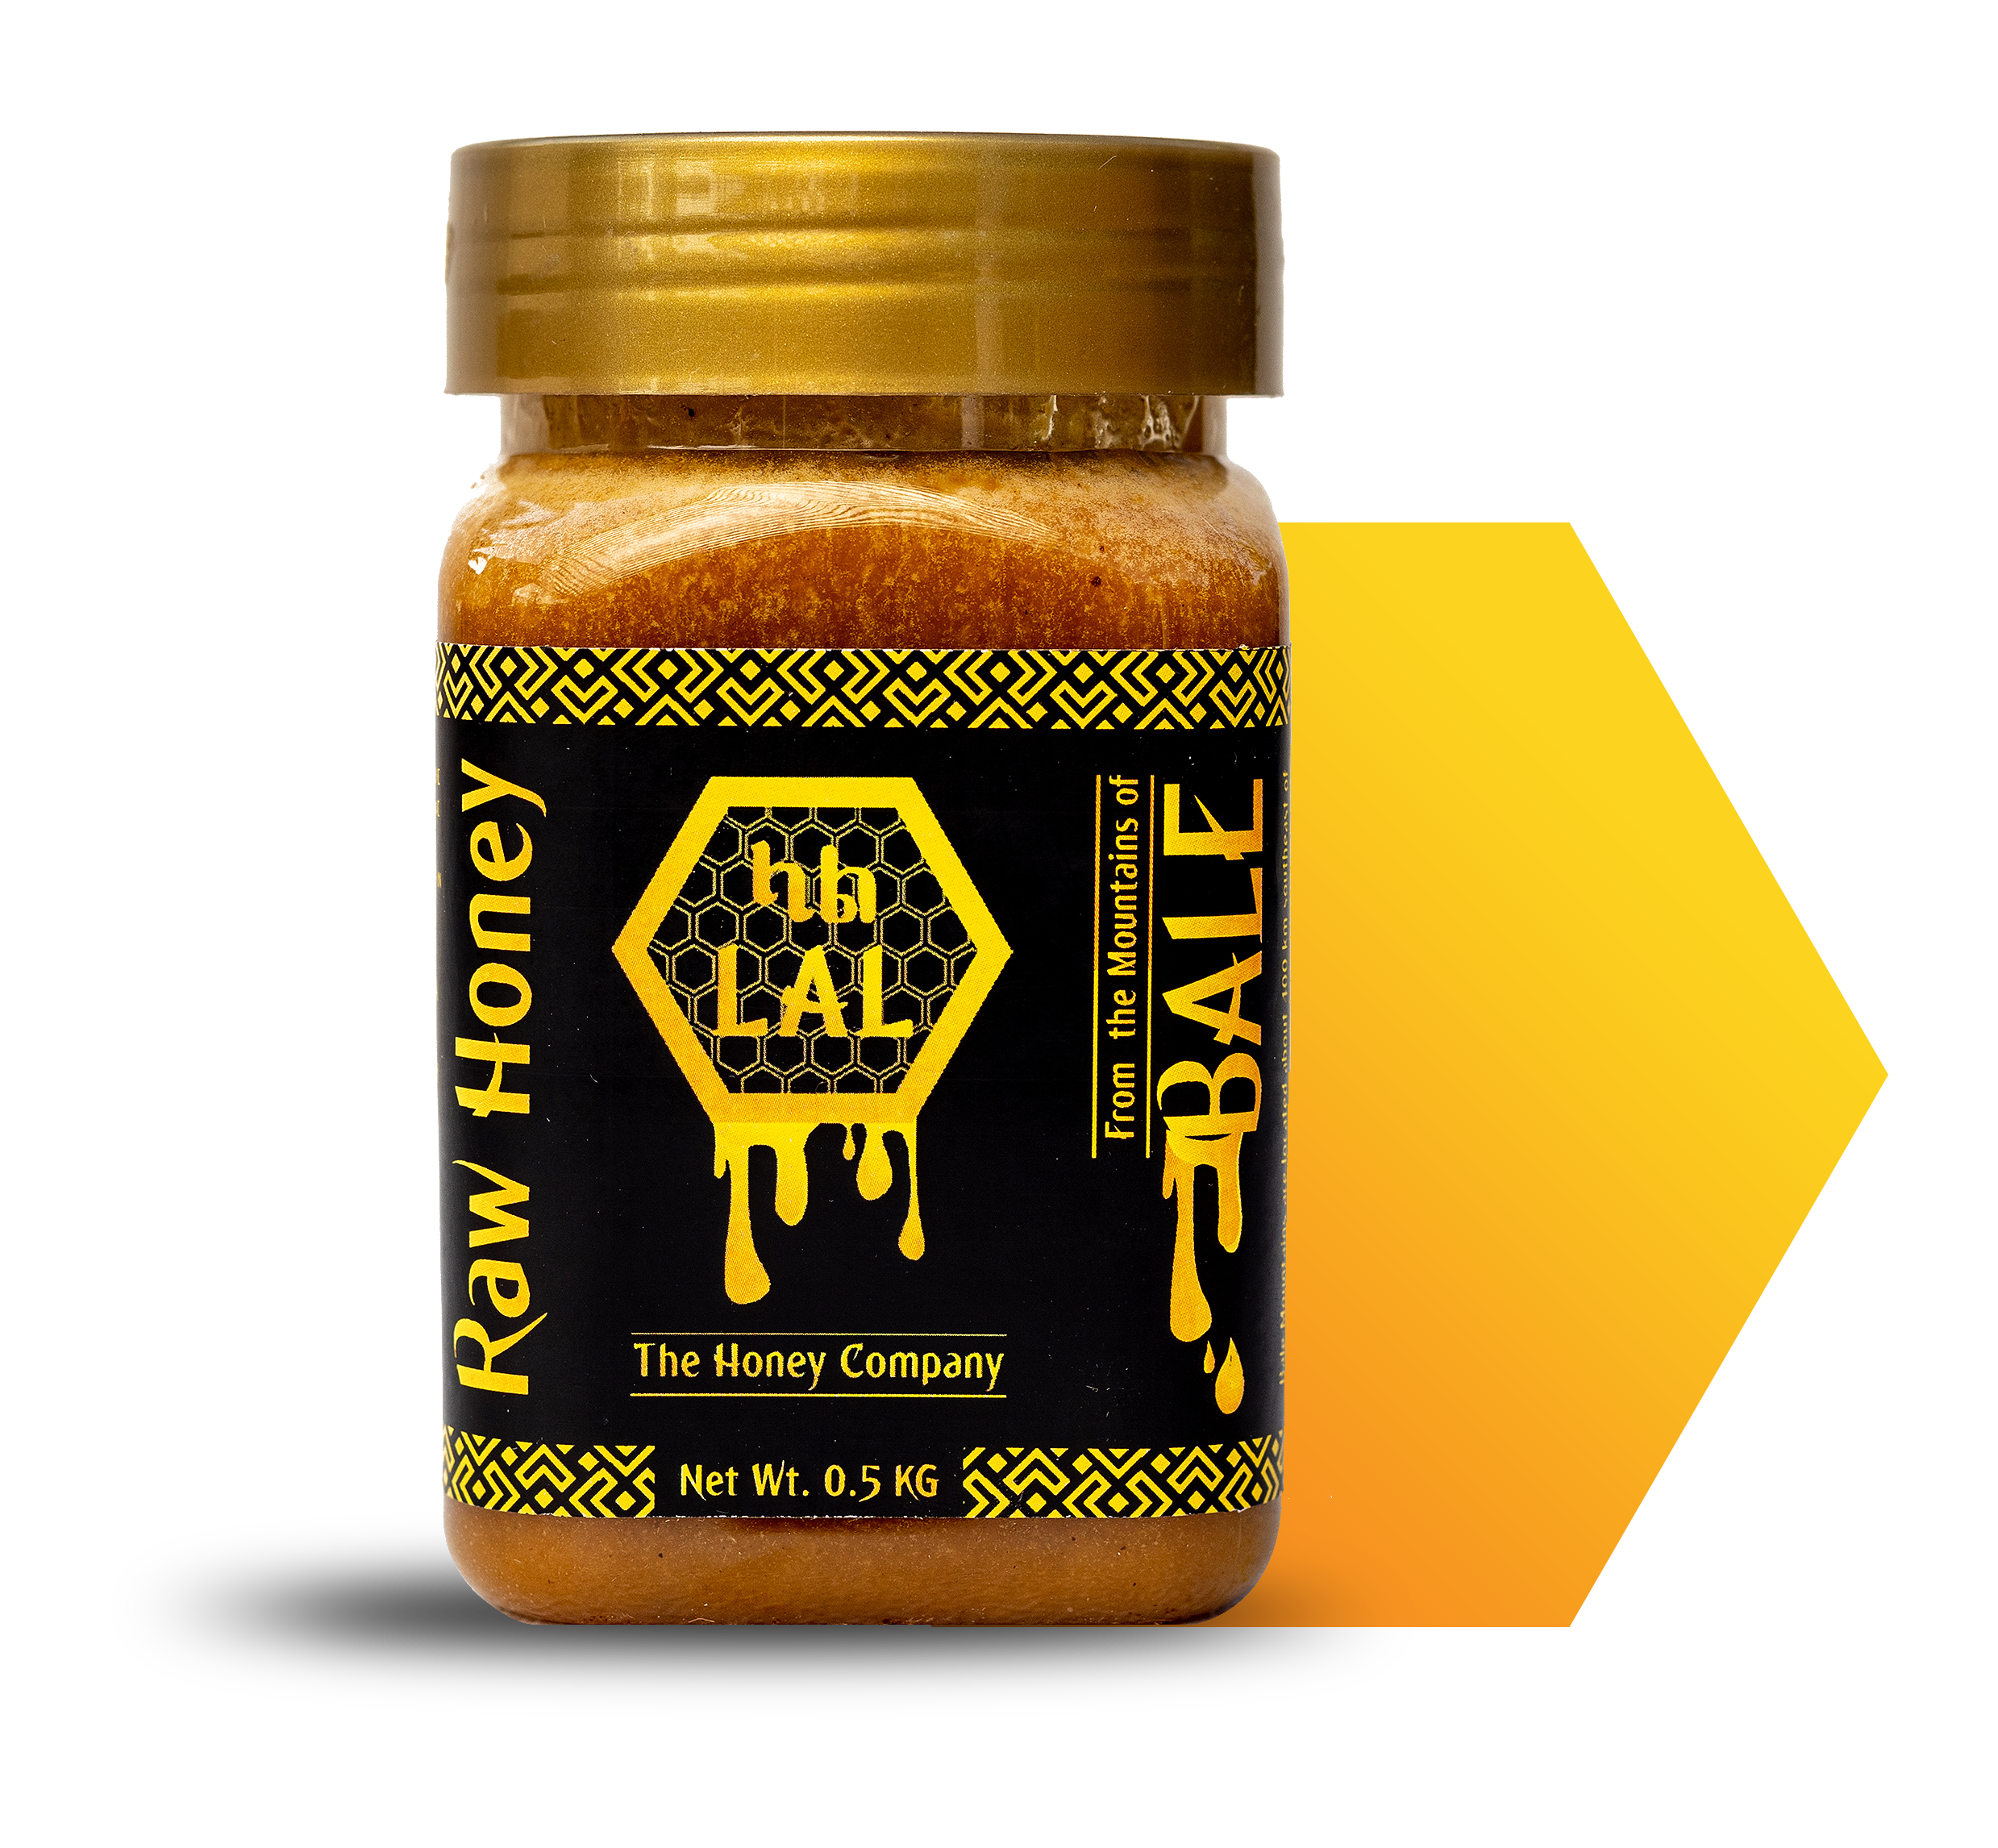 A jar of dark honey called Bale Raw Honey